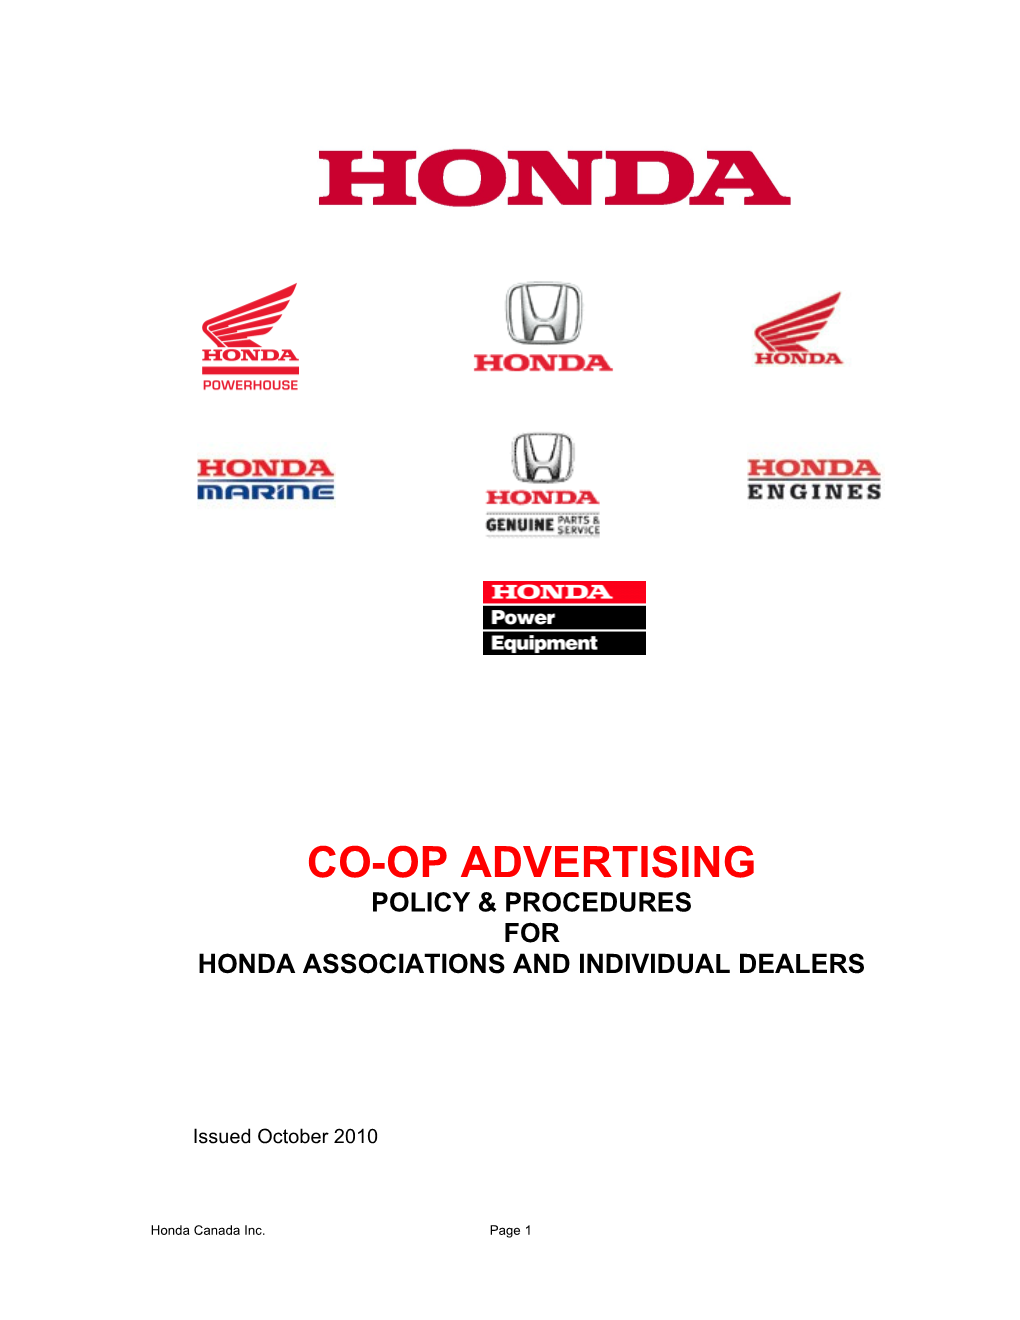 Honda Associations and Individual Dealers